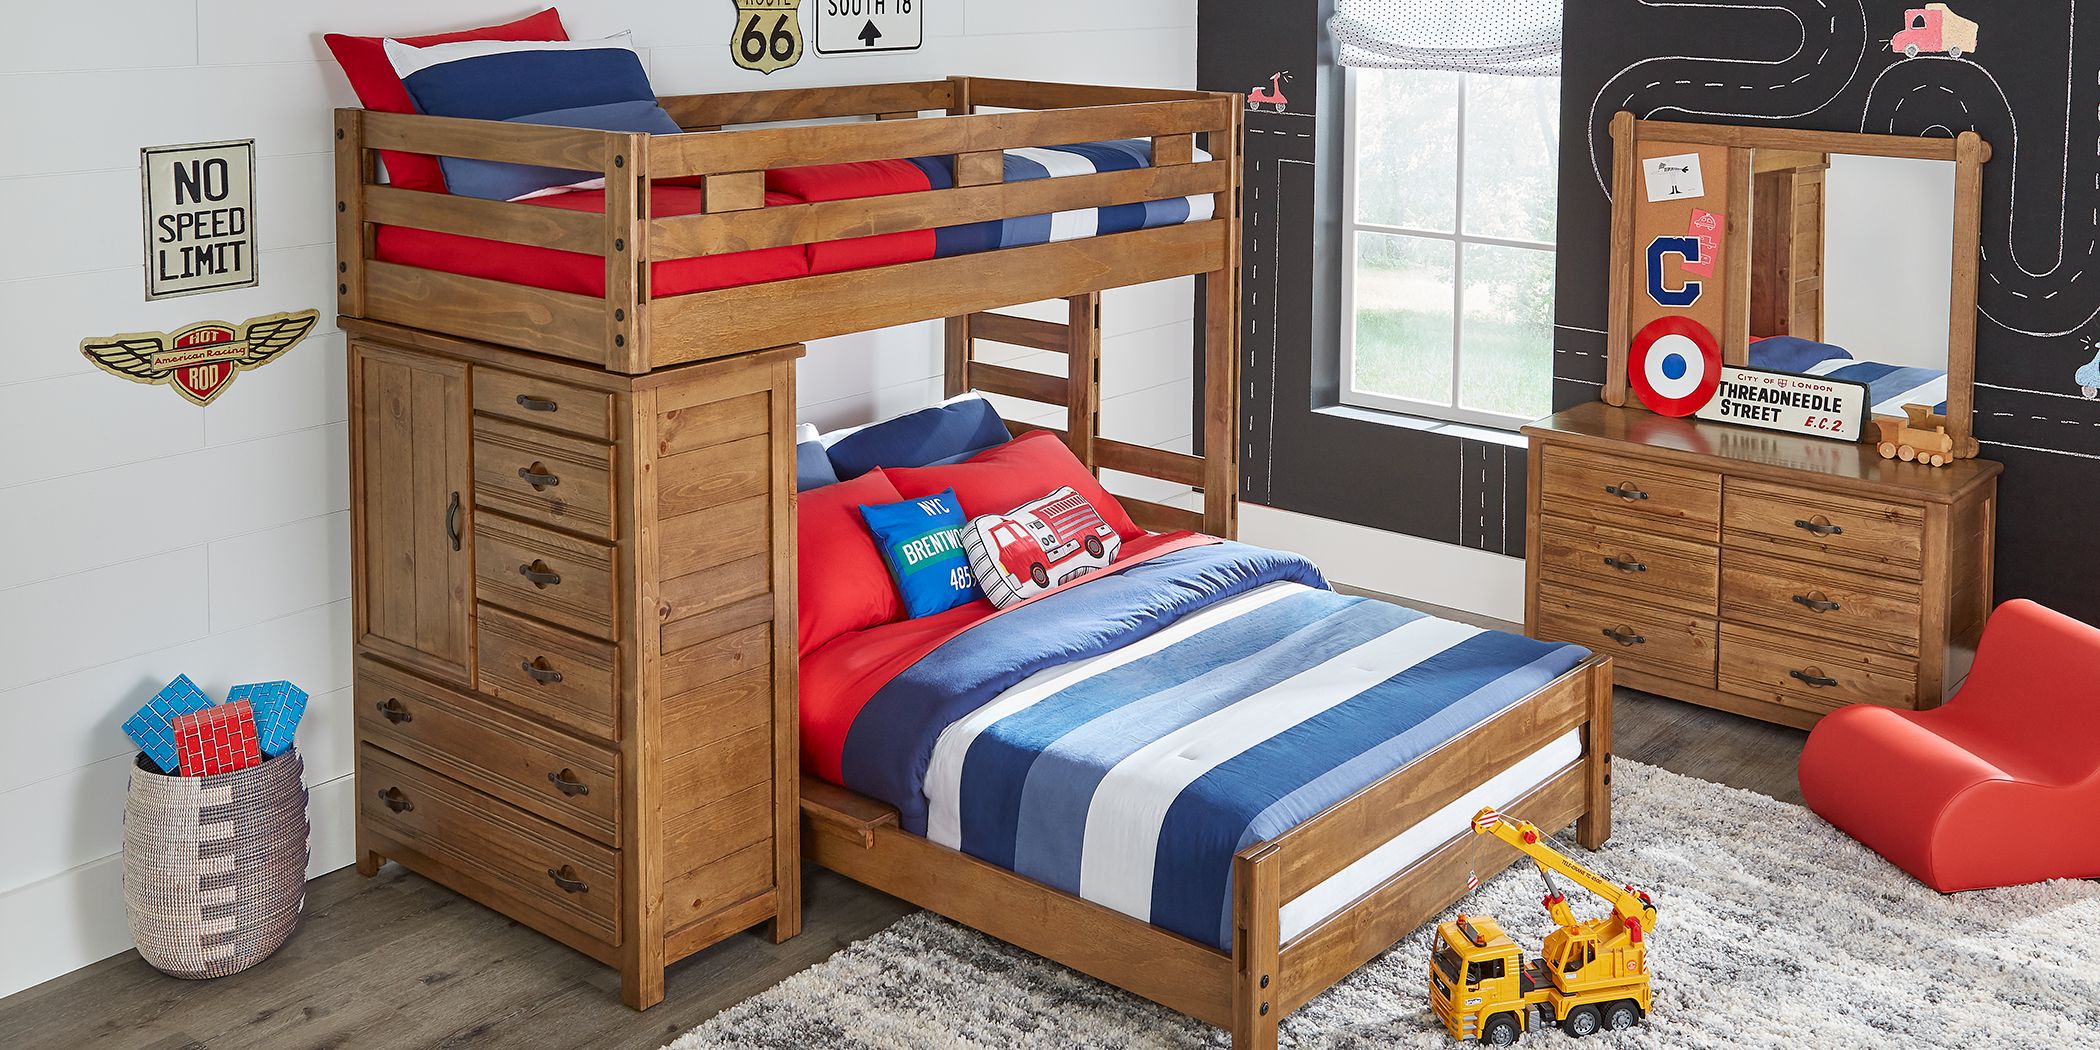 Dorm Room Student Bunk Beds, Best Bunk Beds For College Students